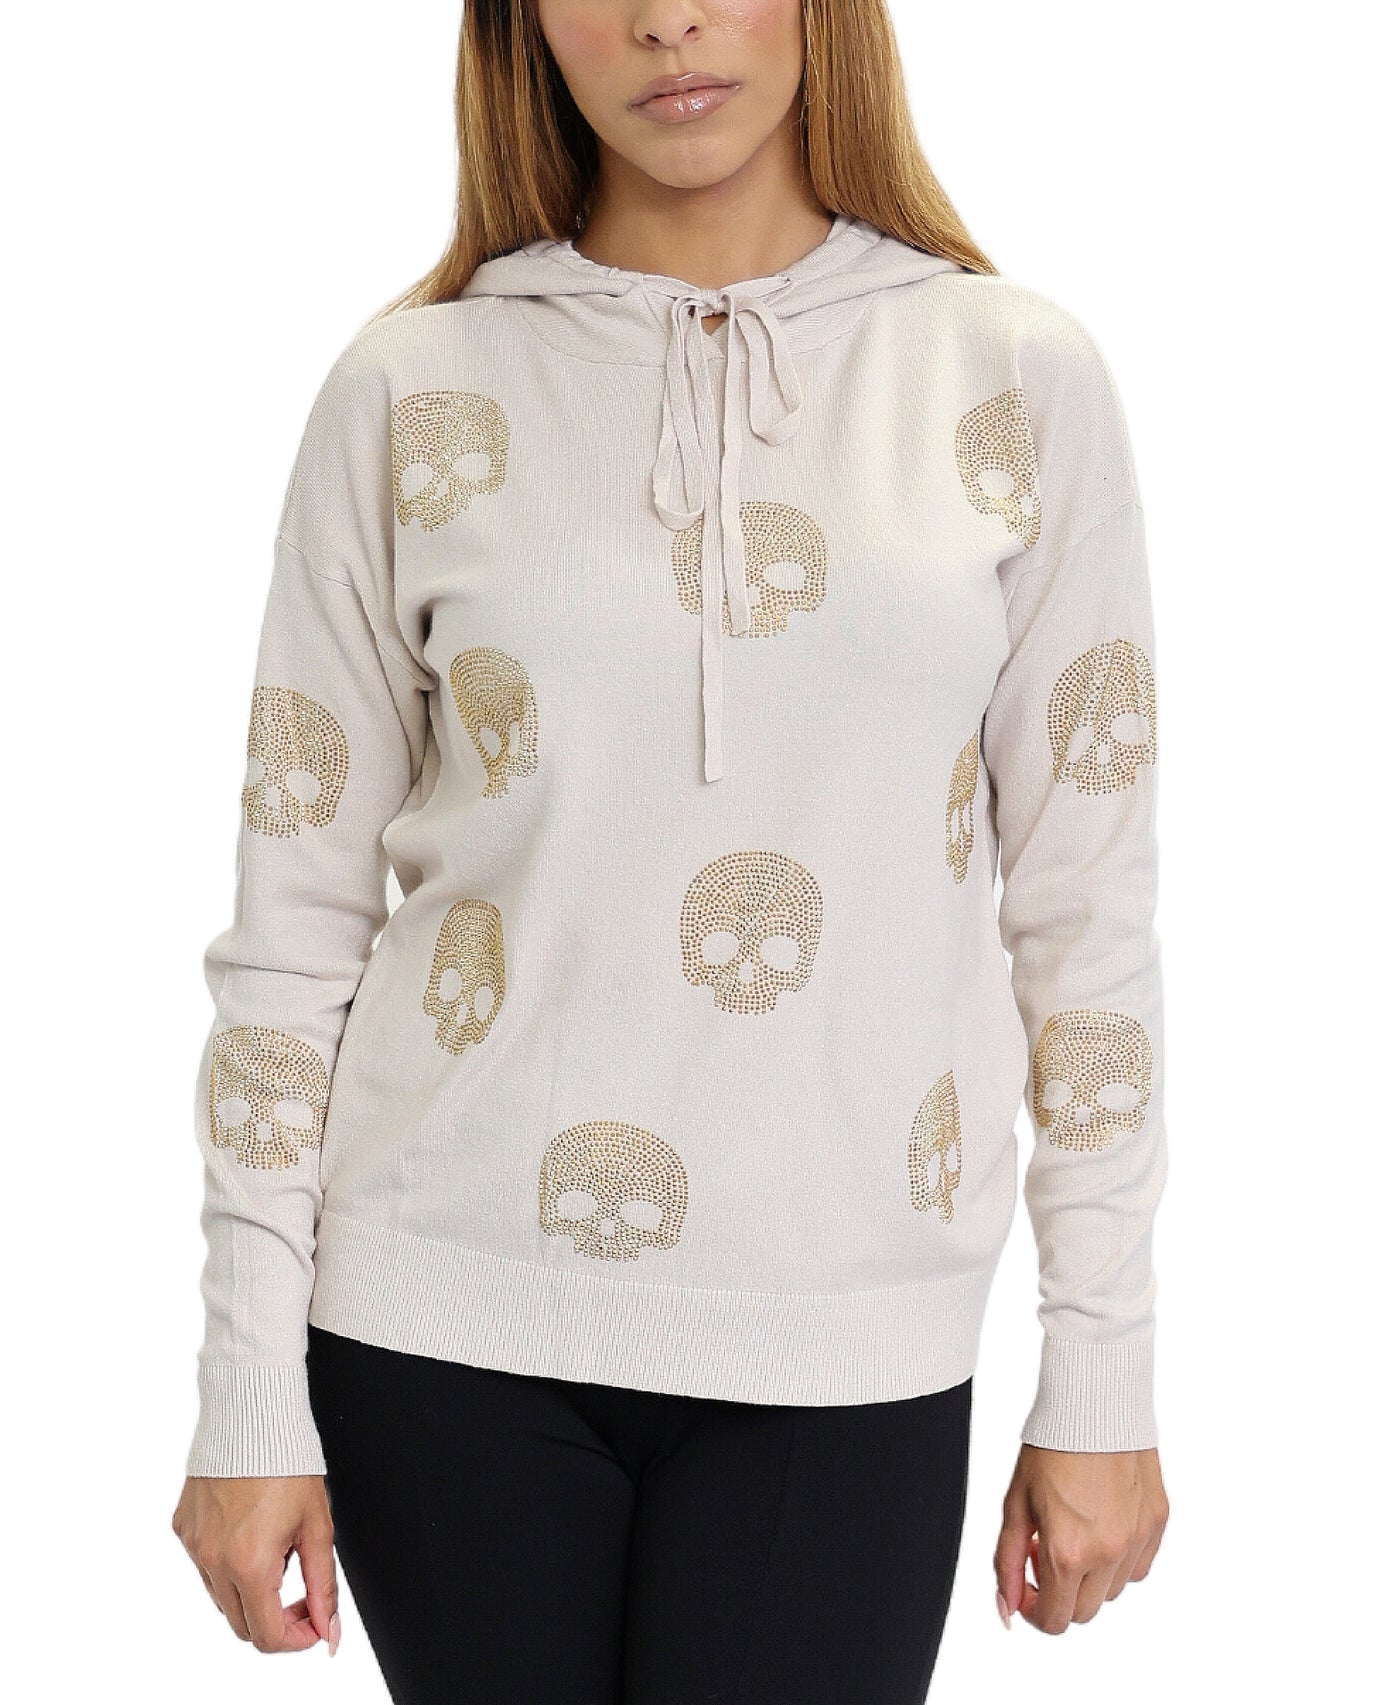 Studded Skull Hooded Sweater image 1